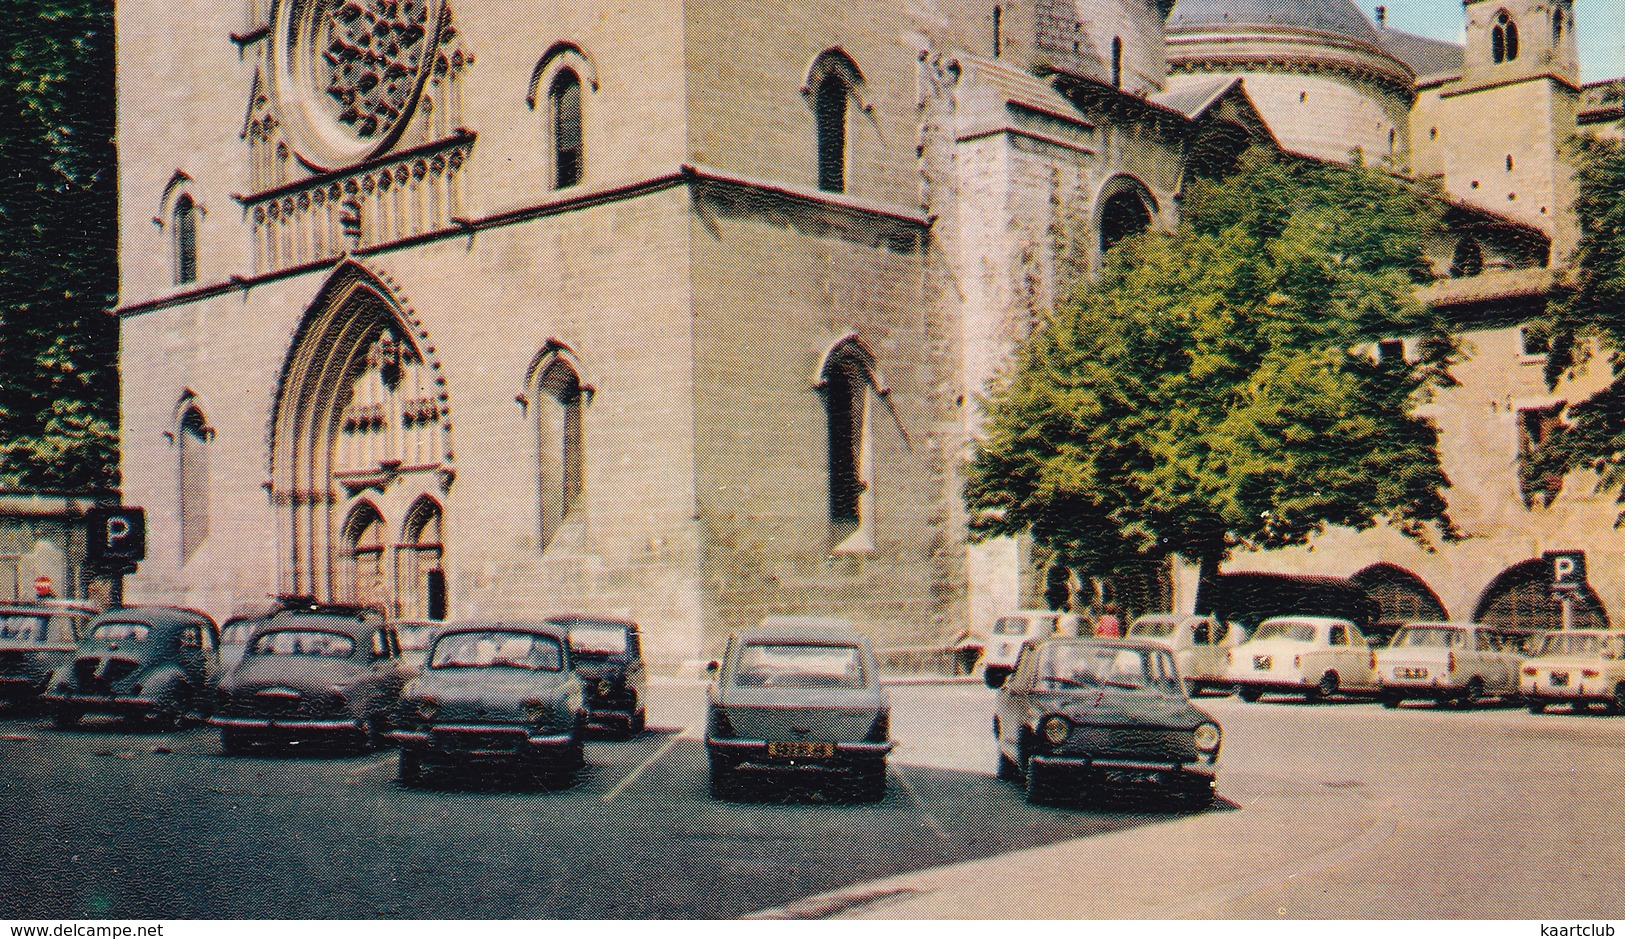 Cahors: SIMCA 1500, ARONDE, PEUGEOT 204 BREAK, 403, 404, RENAULT DAUPHINE, 4CV, 4, 8 - Cathédrale St-Etienne - (Lot) - Toerisme